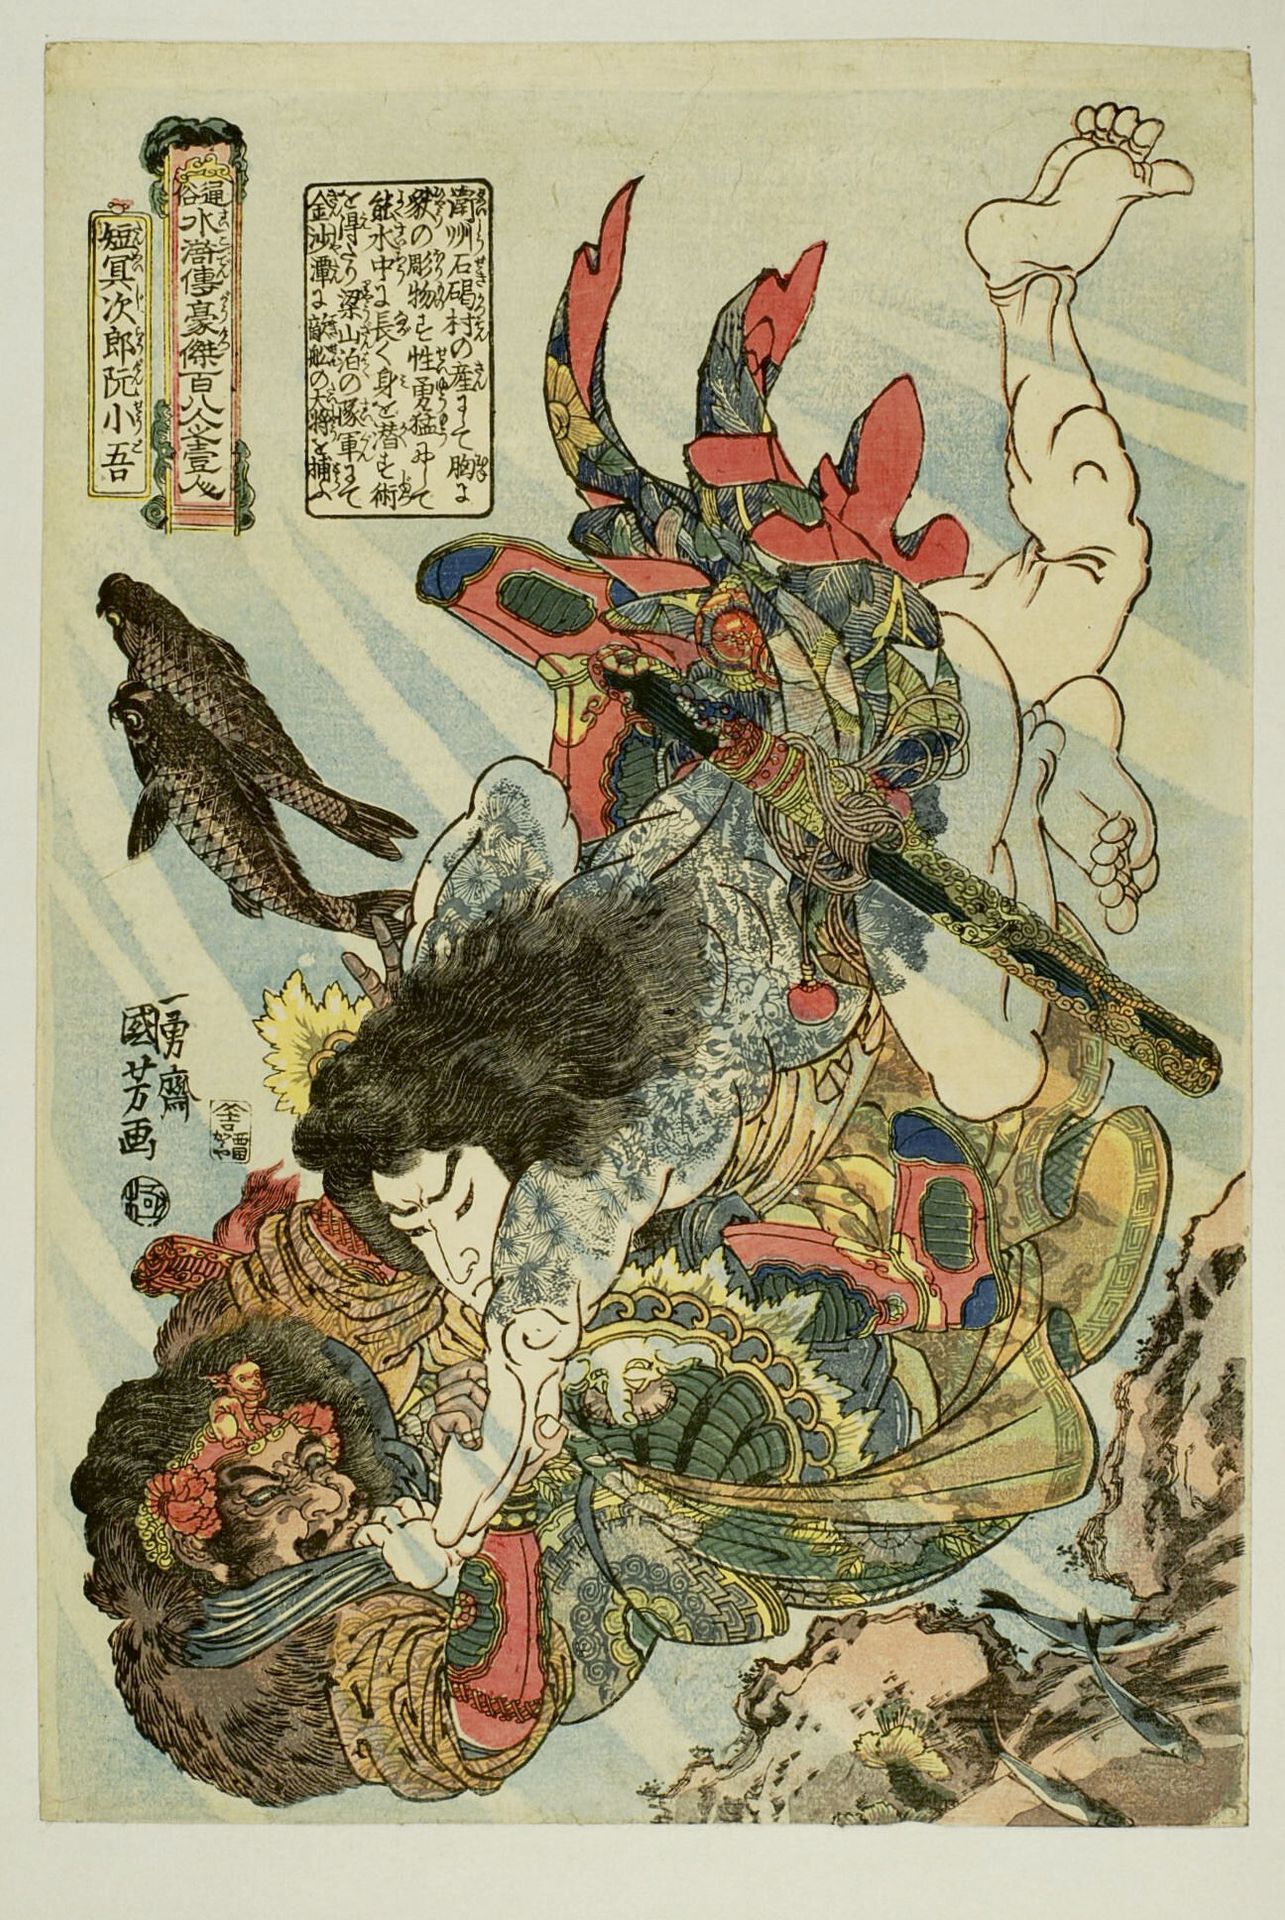 Null 宇都宫邦彦 (1797-1861)
水浒传》系列中的 "大班"（Oban tate-e），《水浒传》中的108位英雄，板块为 "阮小五"（Tammei&hellip;